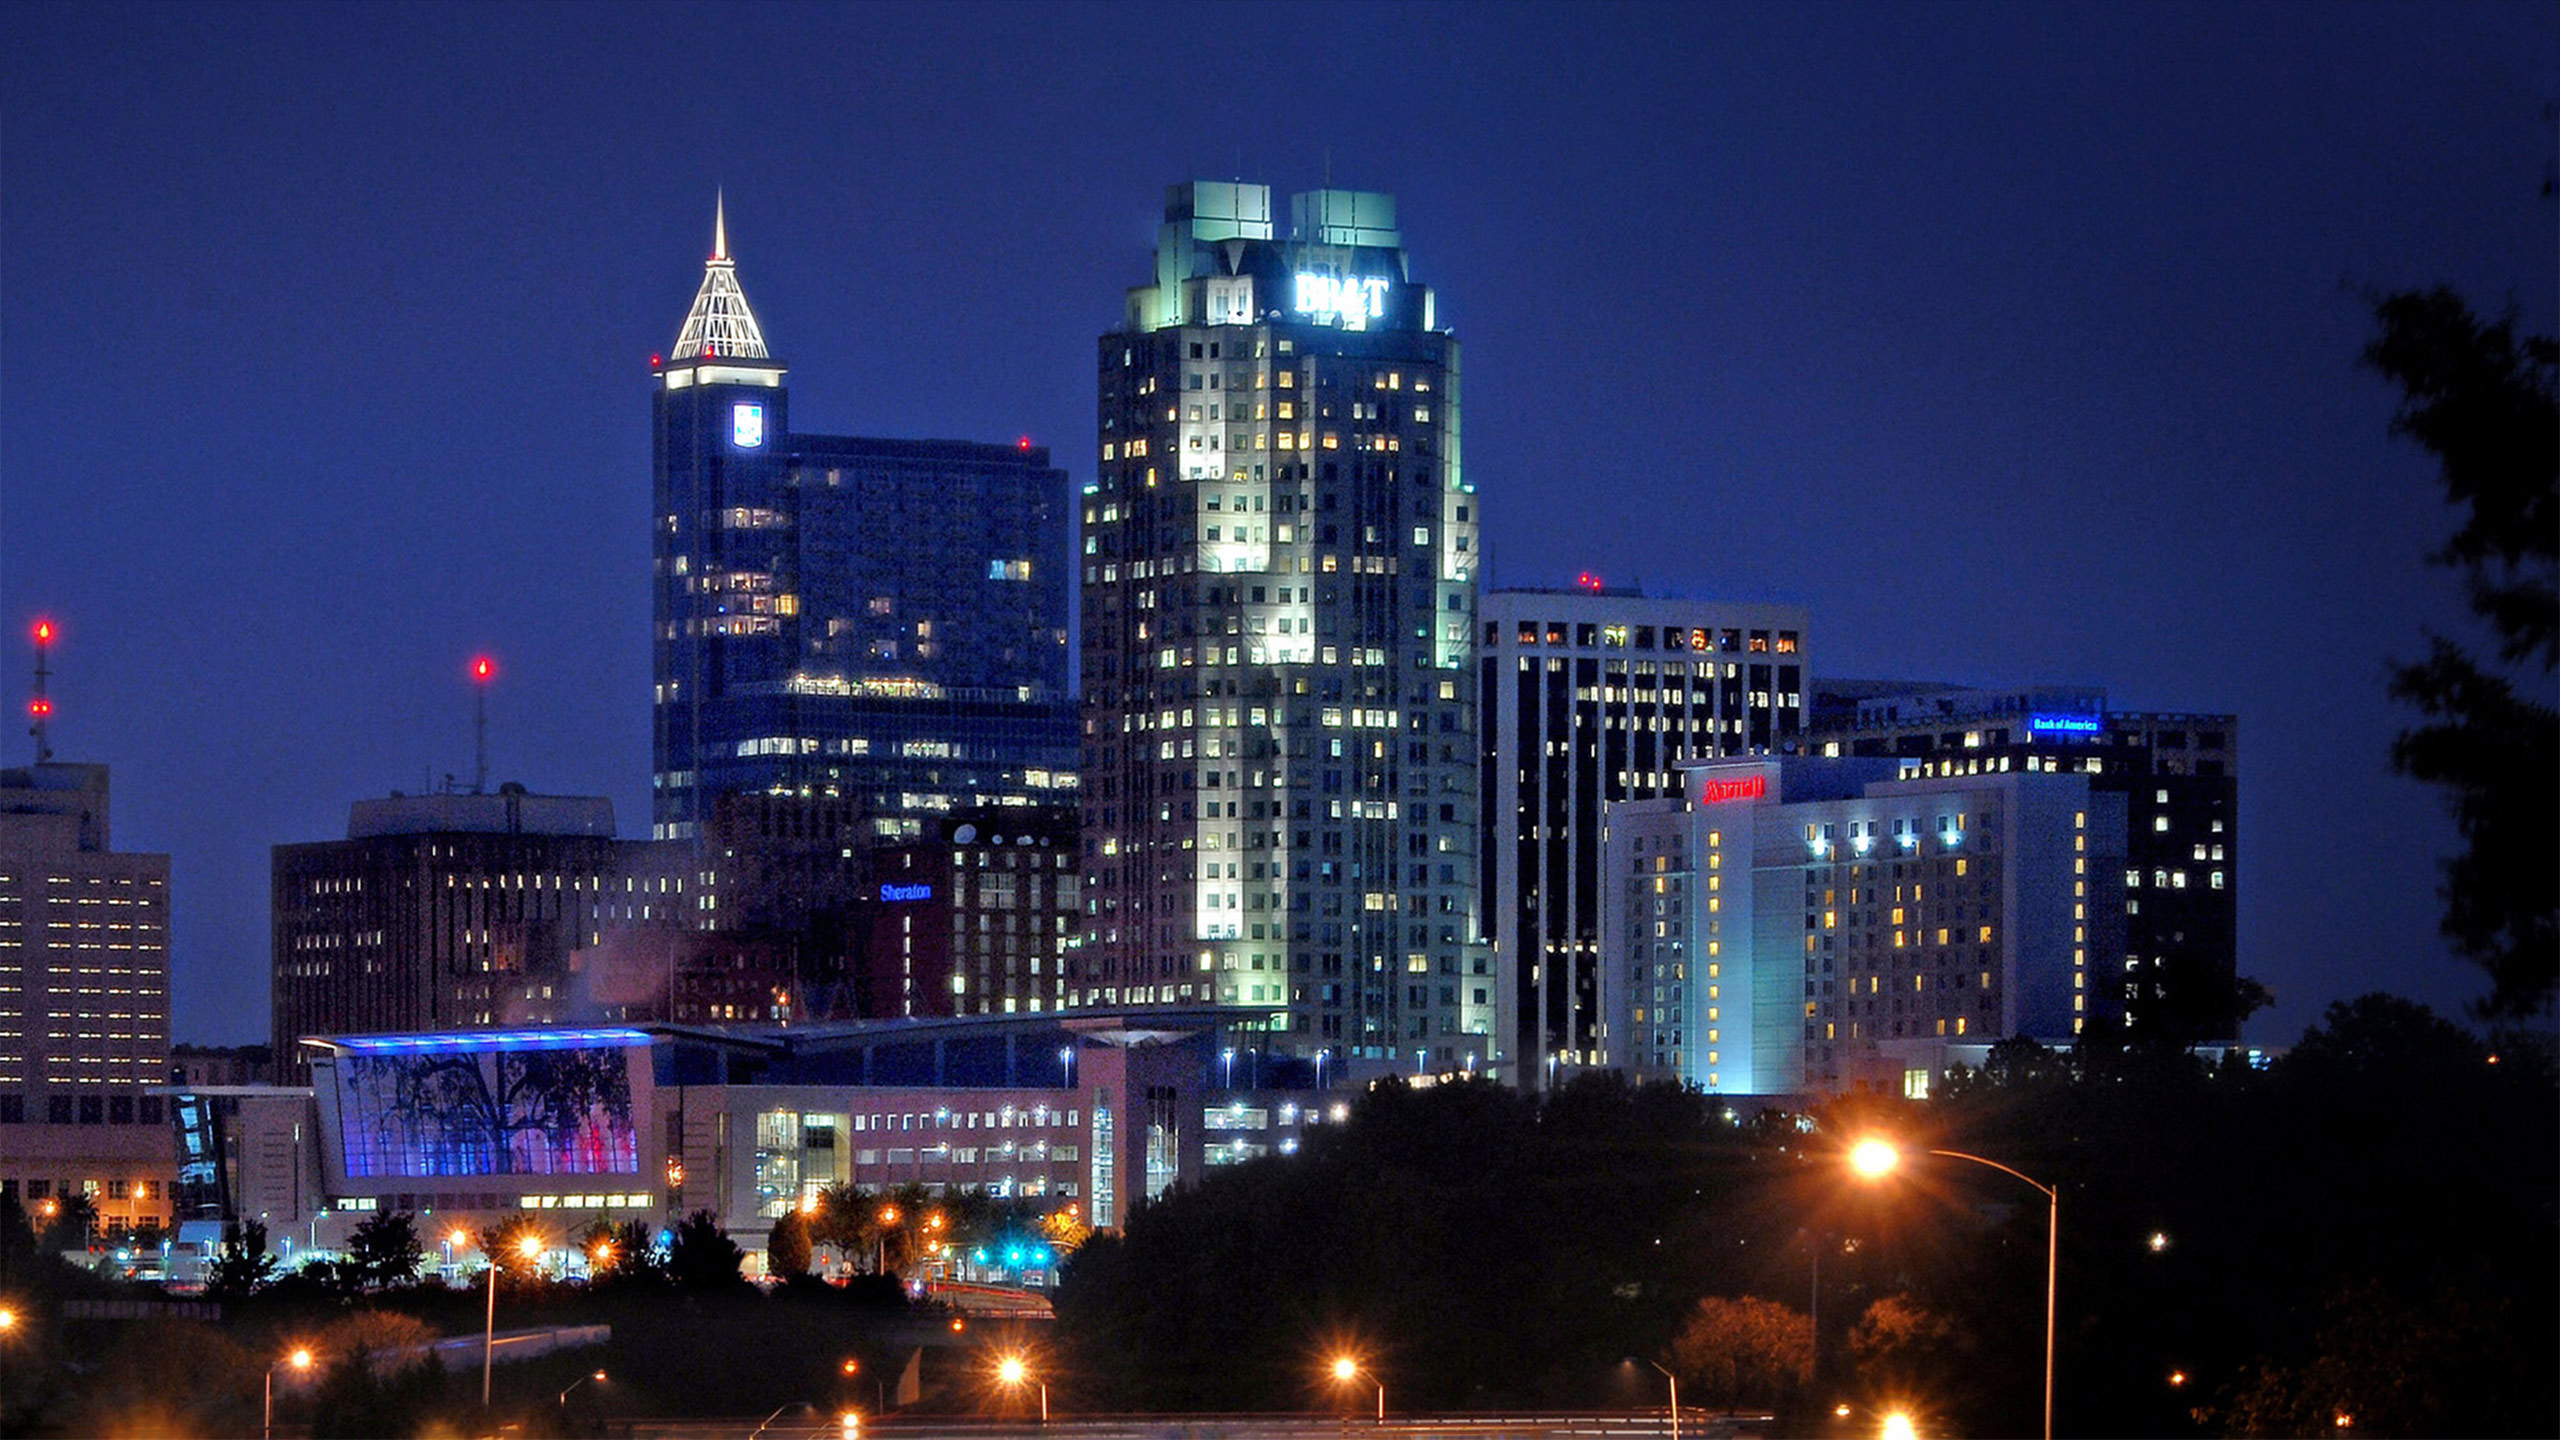 The beautiful Raleigh skyline at night